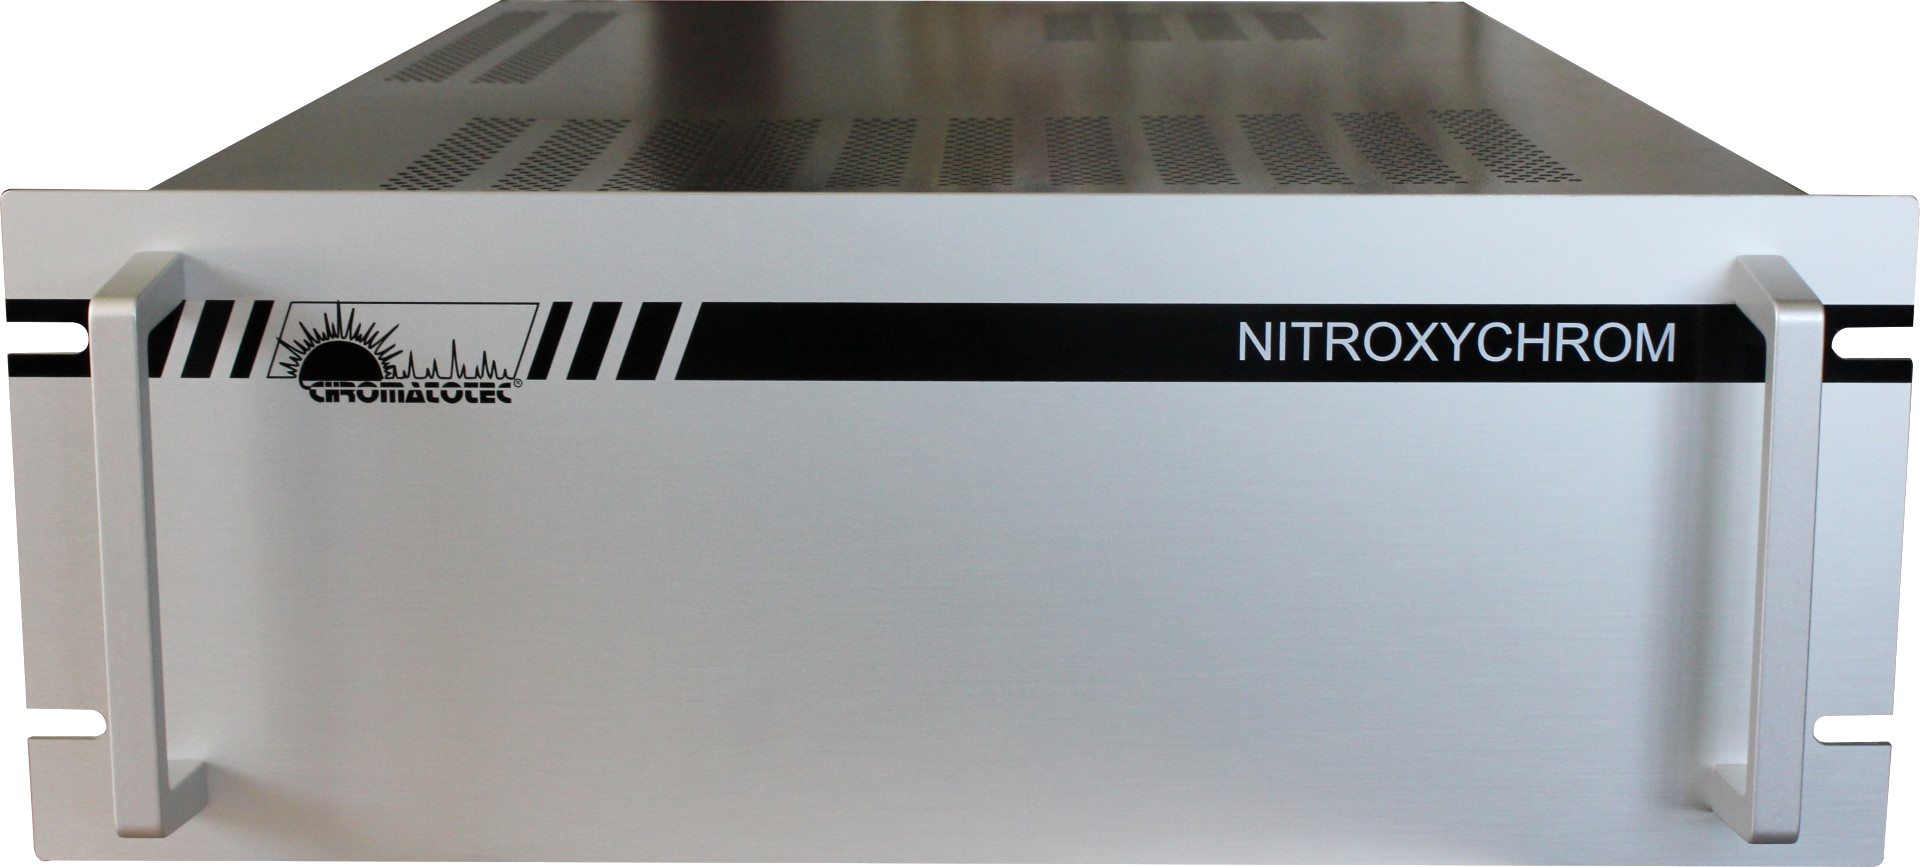 Nitrogen generator – Nitroxychrom